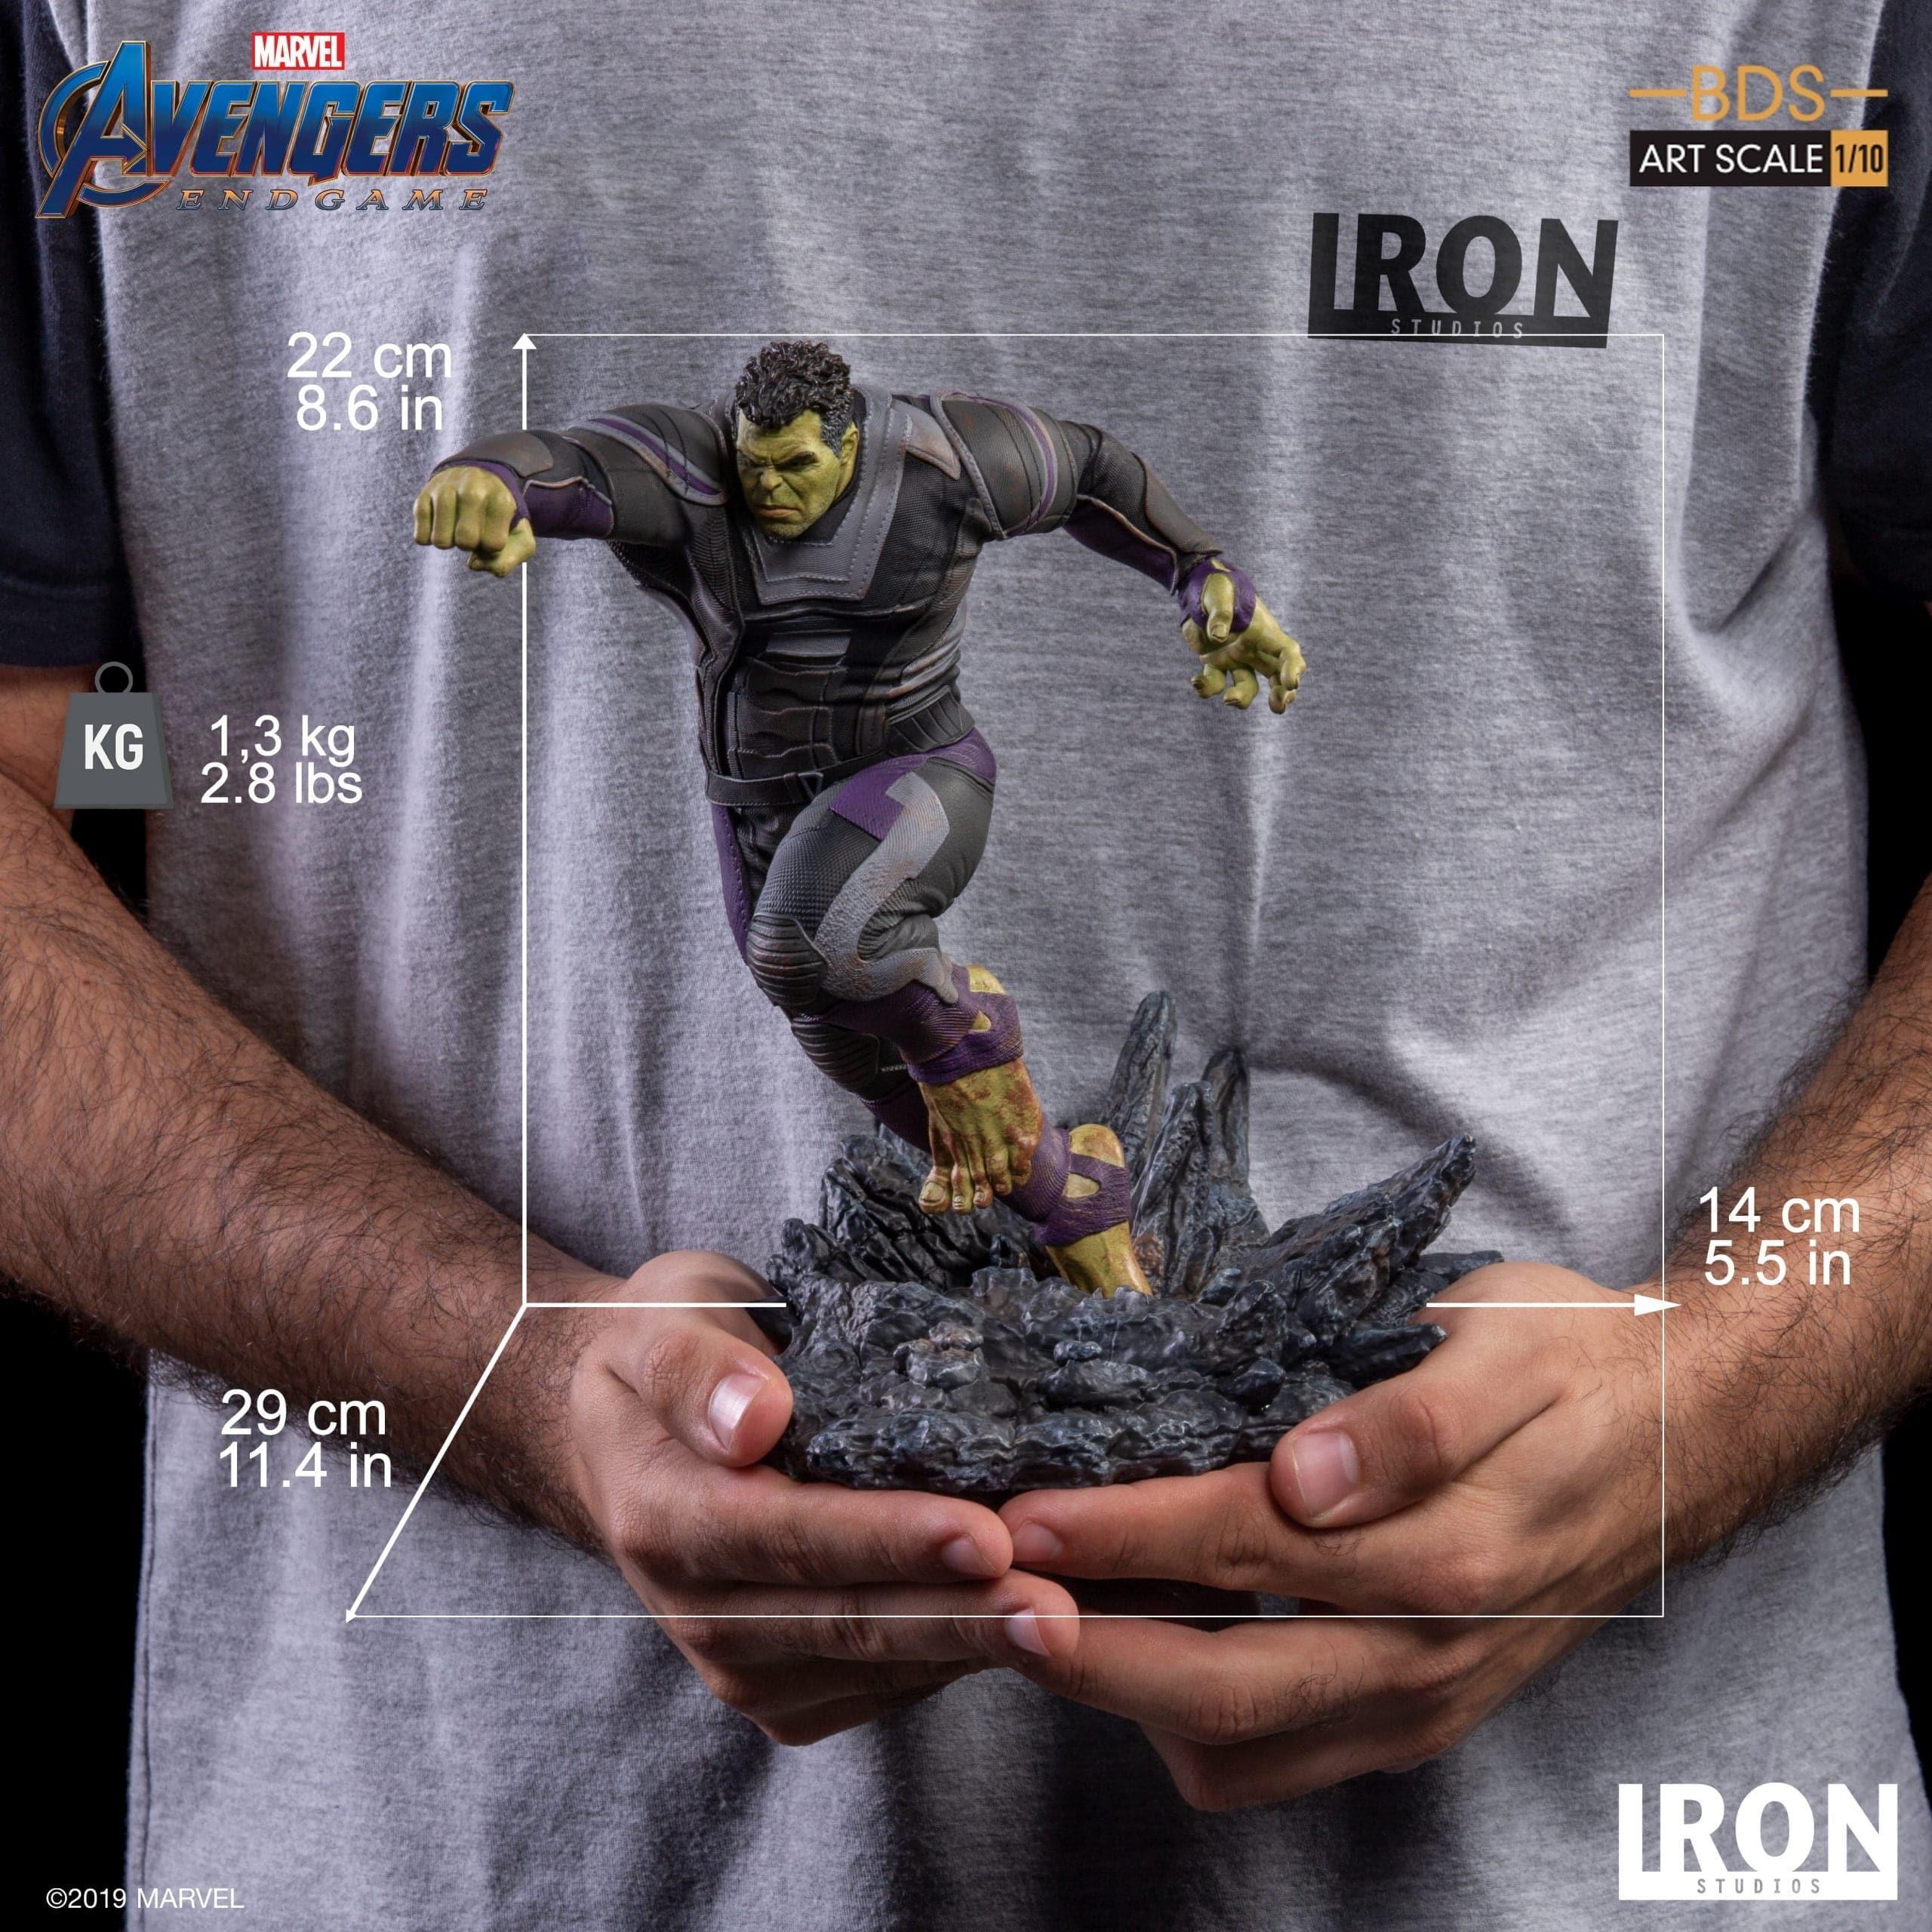 Iron Studios - Avengers: Endgame - Hulk BDS Art Scale Statue 1/10 - The Card Vault